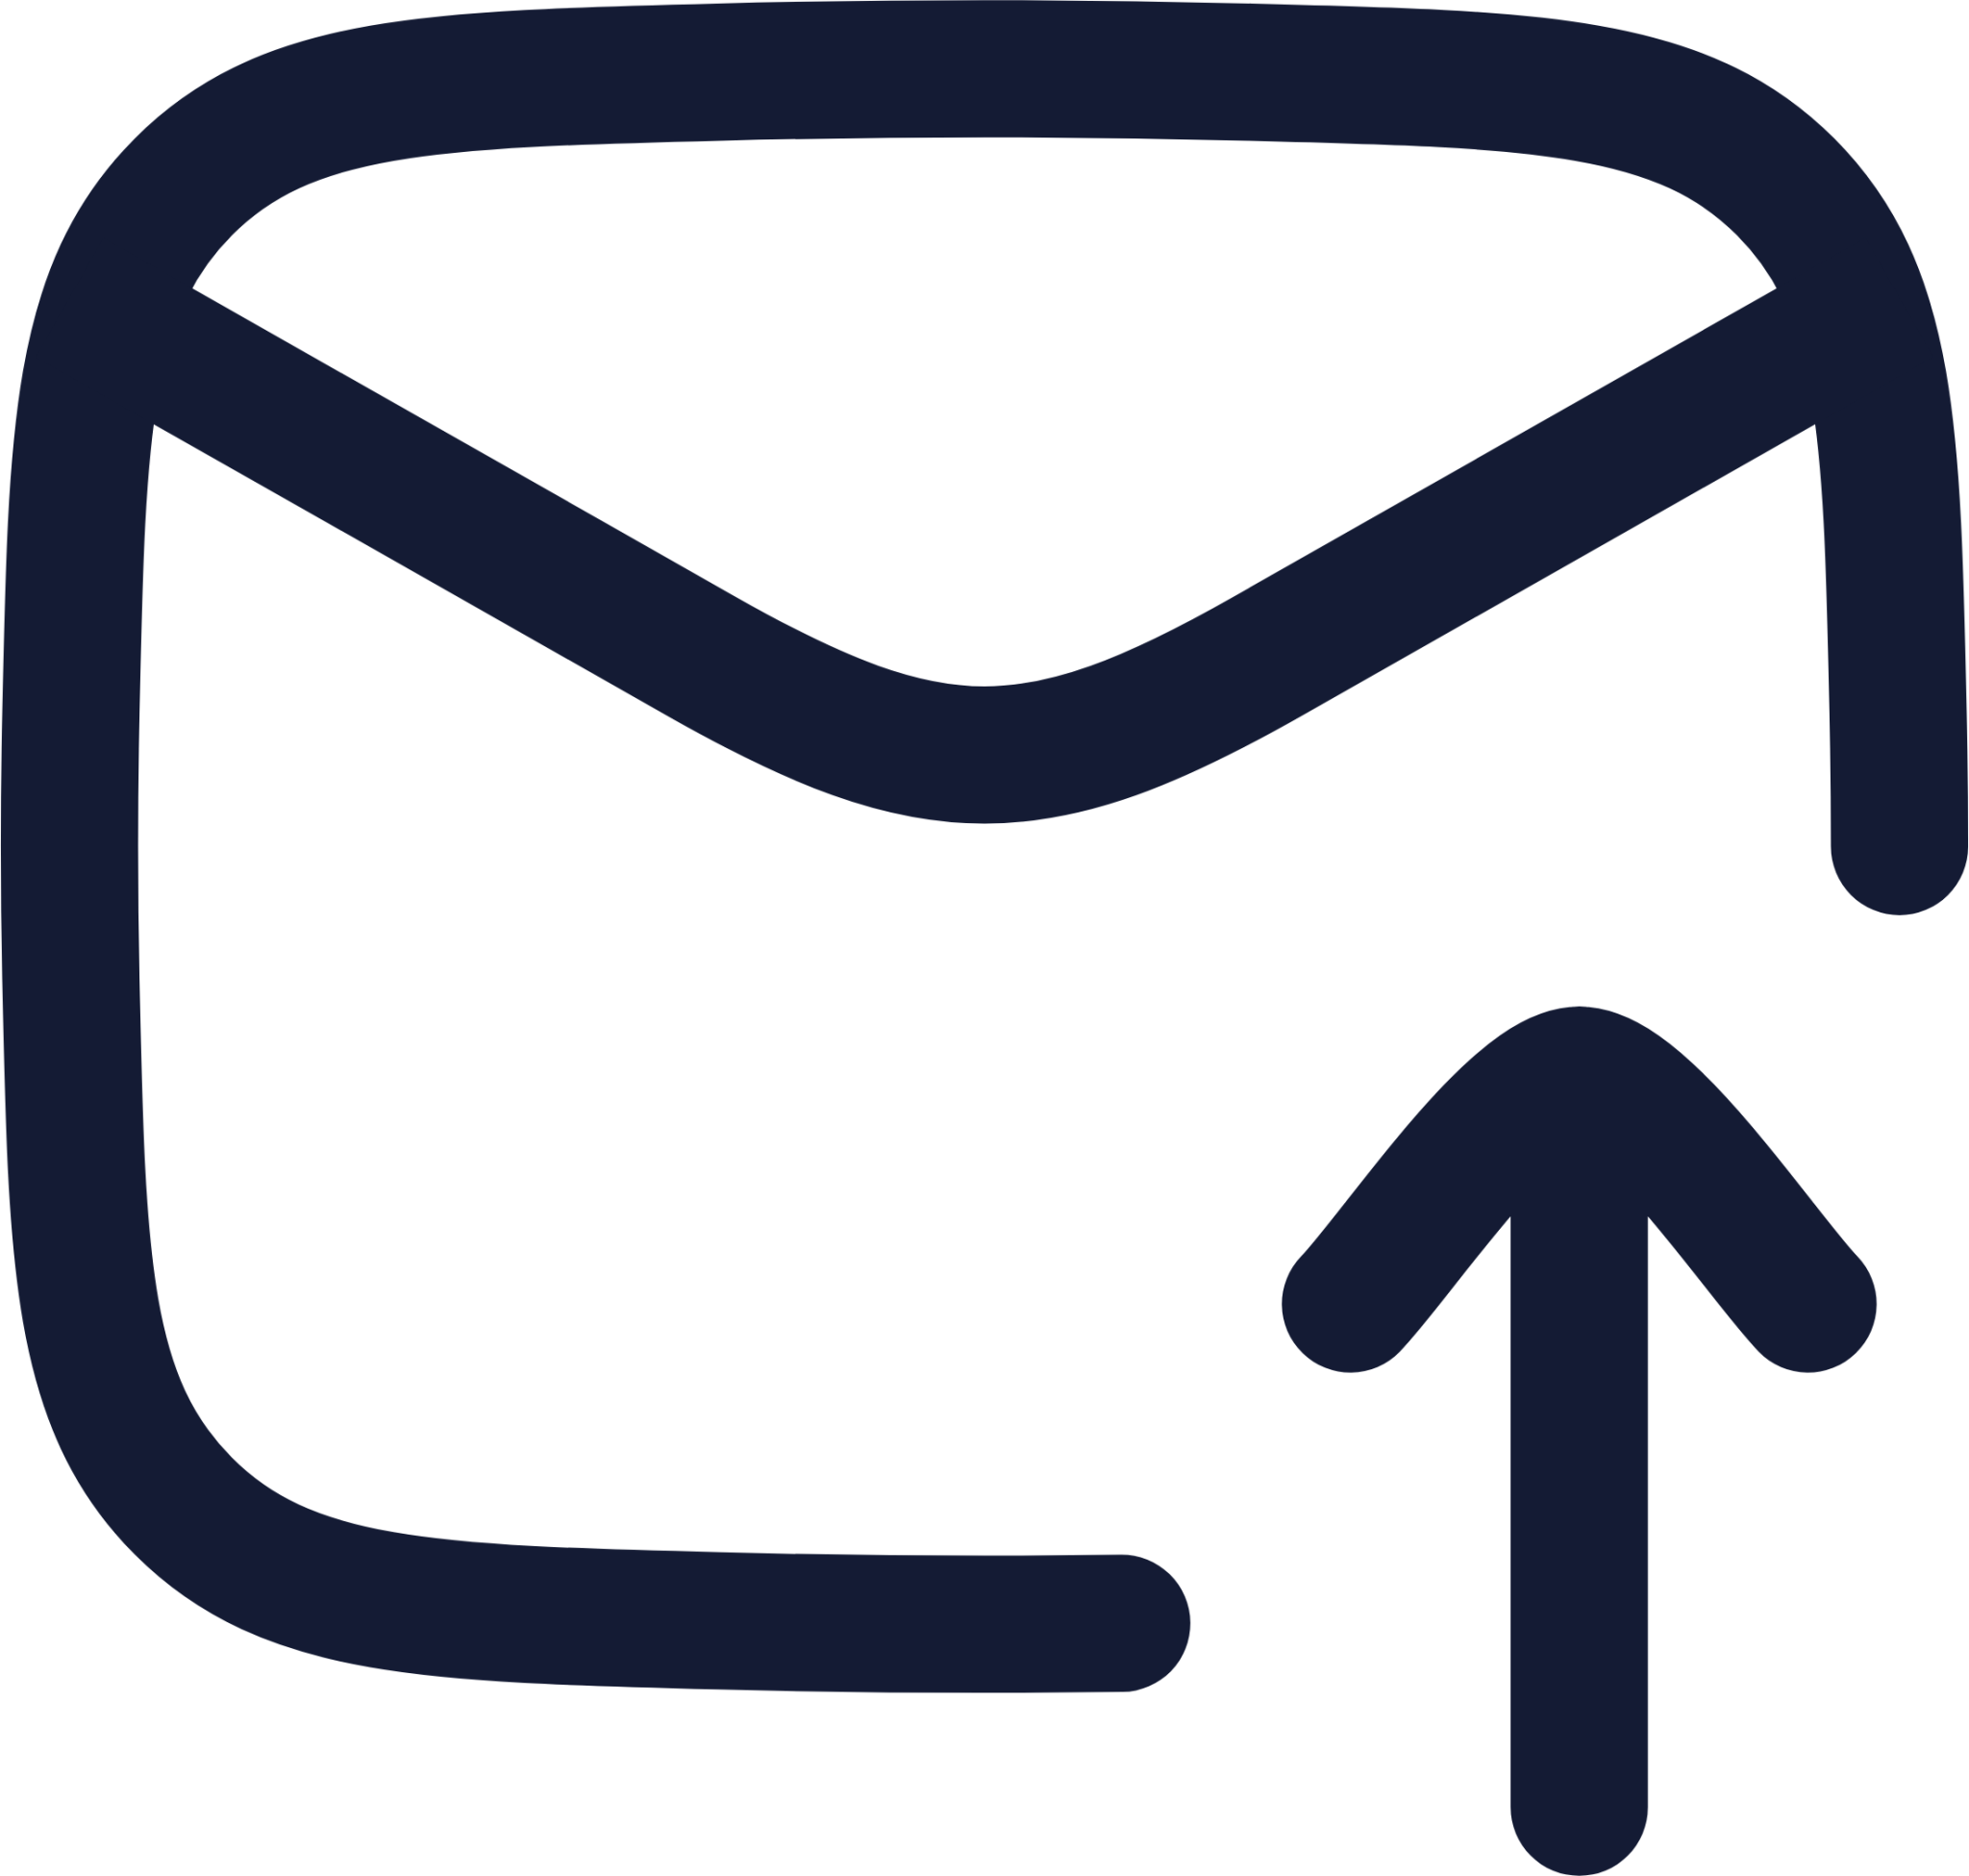 mail upload icon